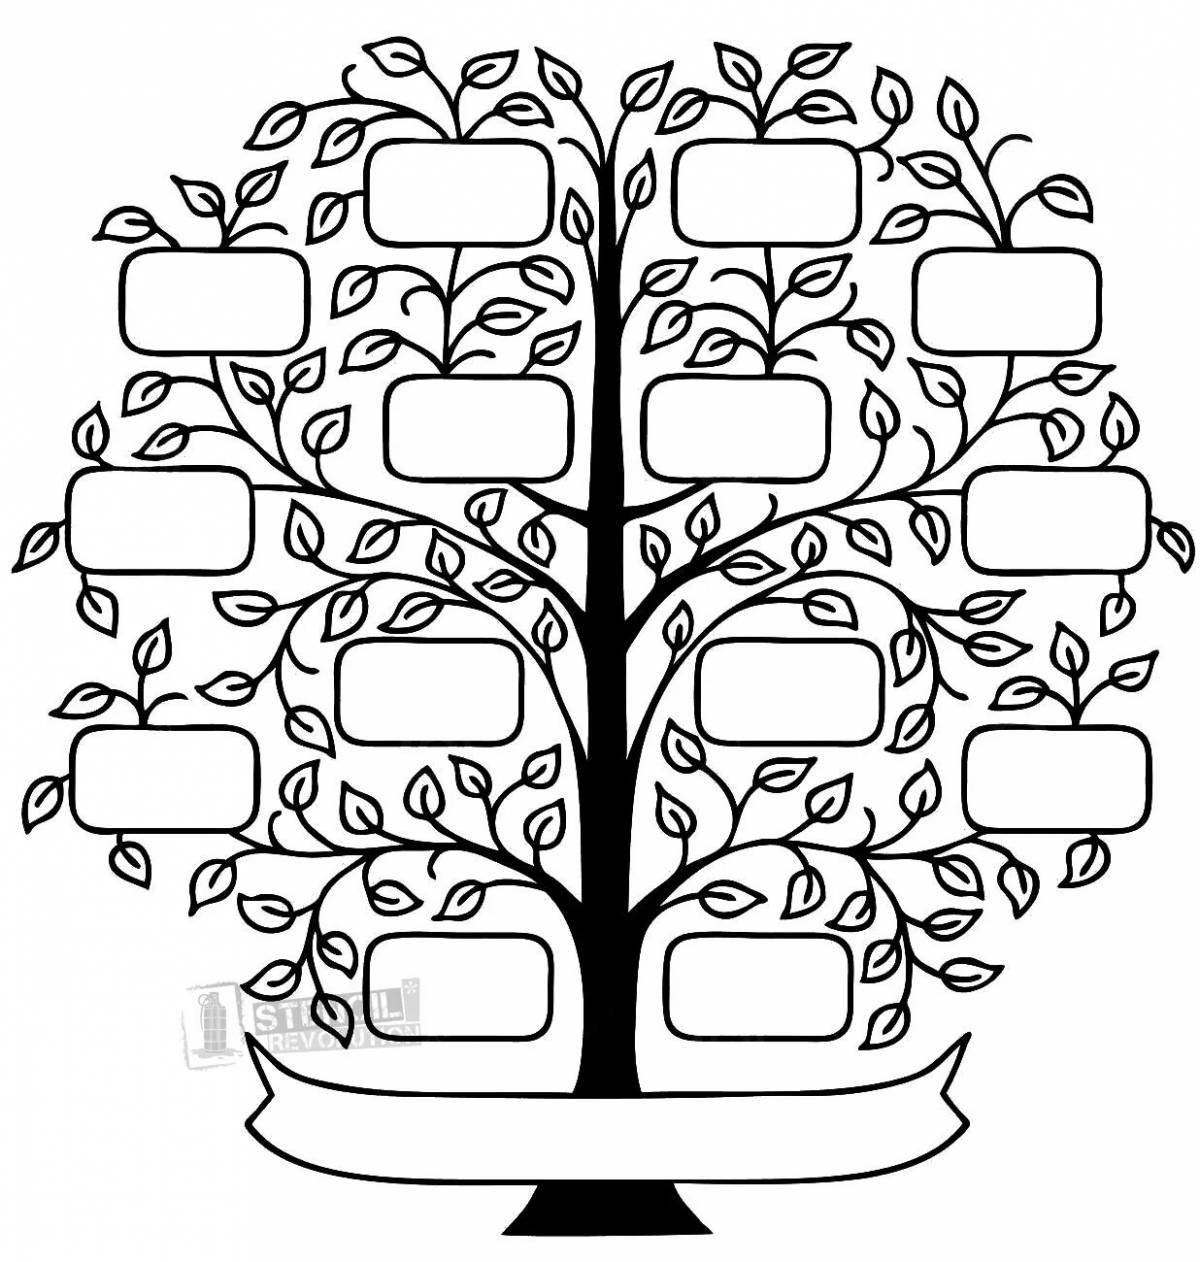 Charming family tree illustration